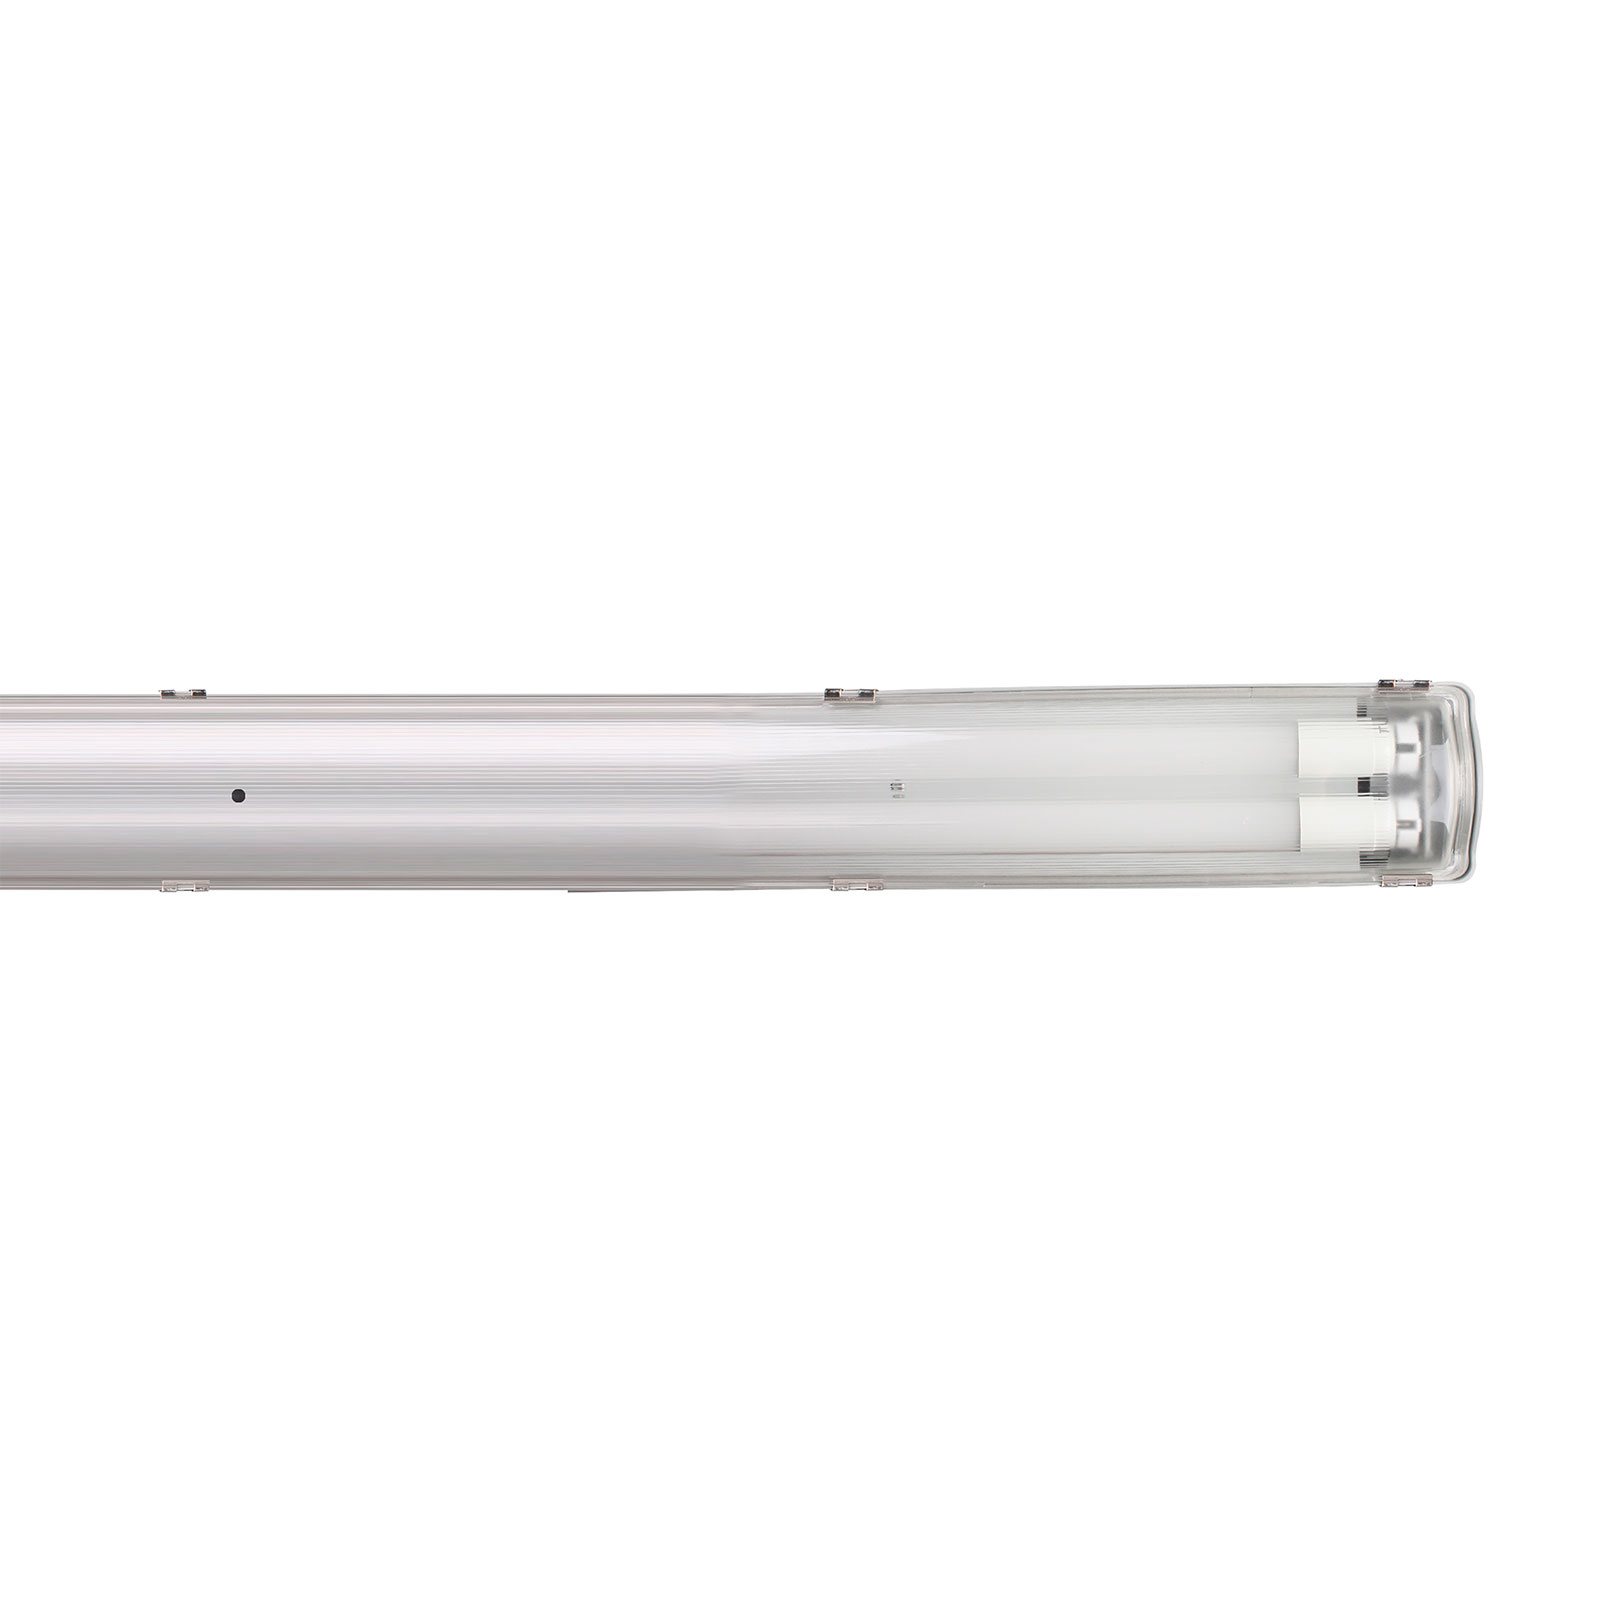 Aqua-Promo 2/120 LED moisture-proof light 127.2 cm